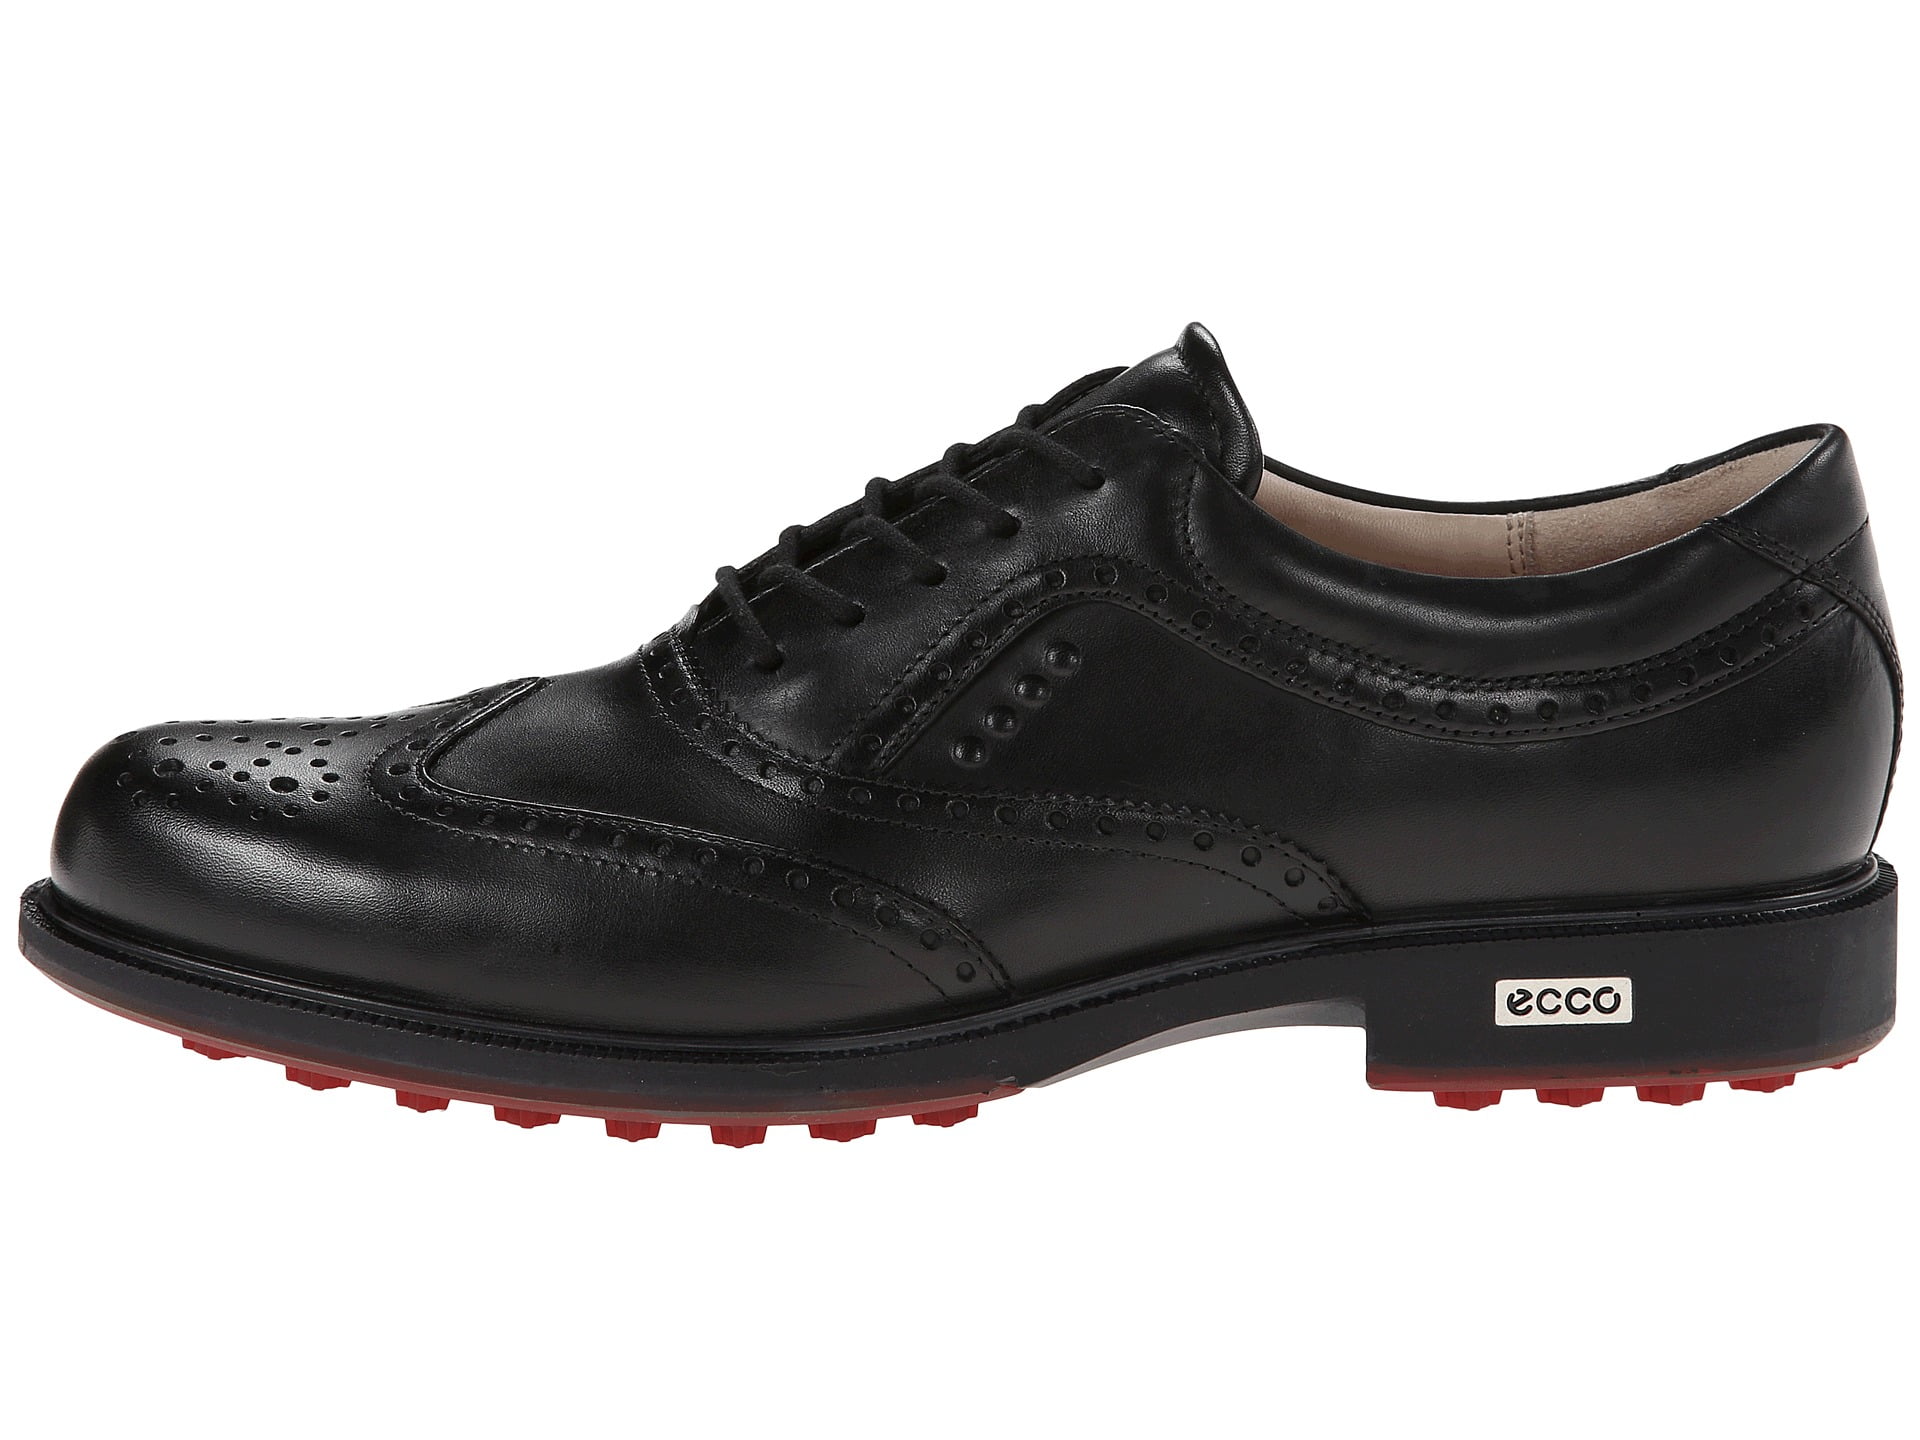 ECCO Tour Hybrid Wingtip Golf Shoes Black/Brick (Size 46.0 12-12.5M - Walmart.com